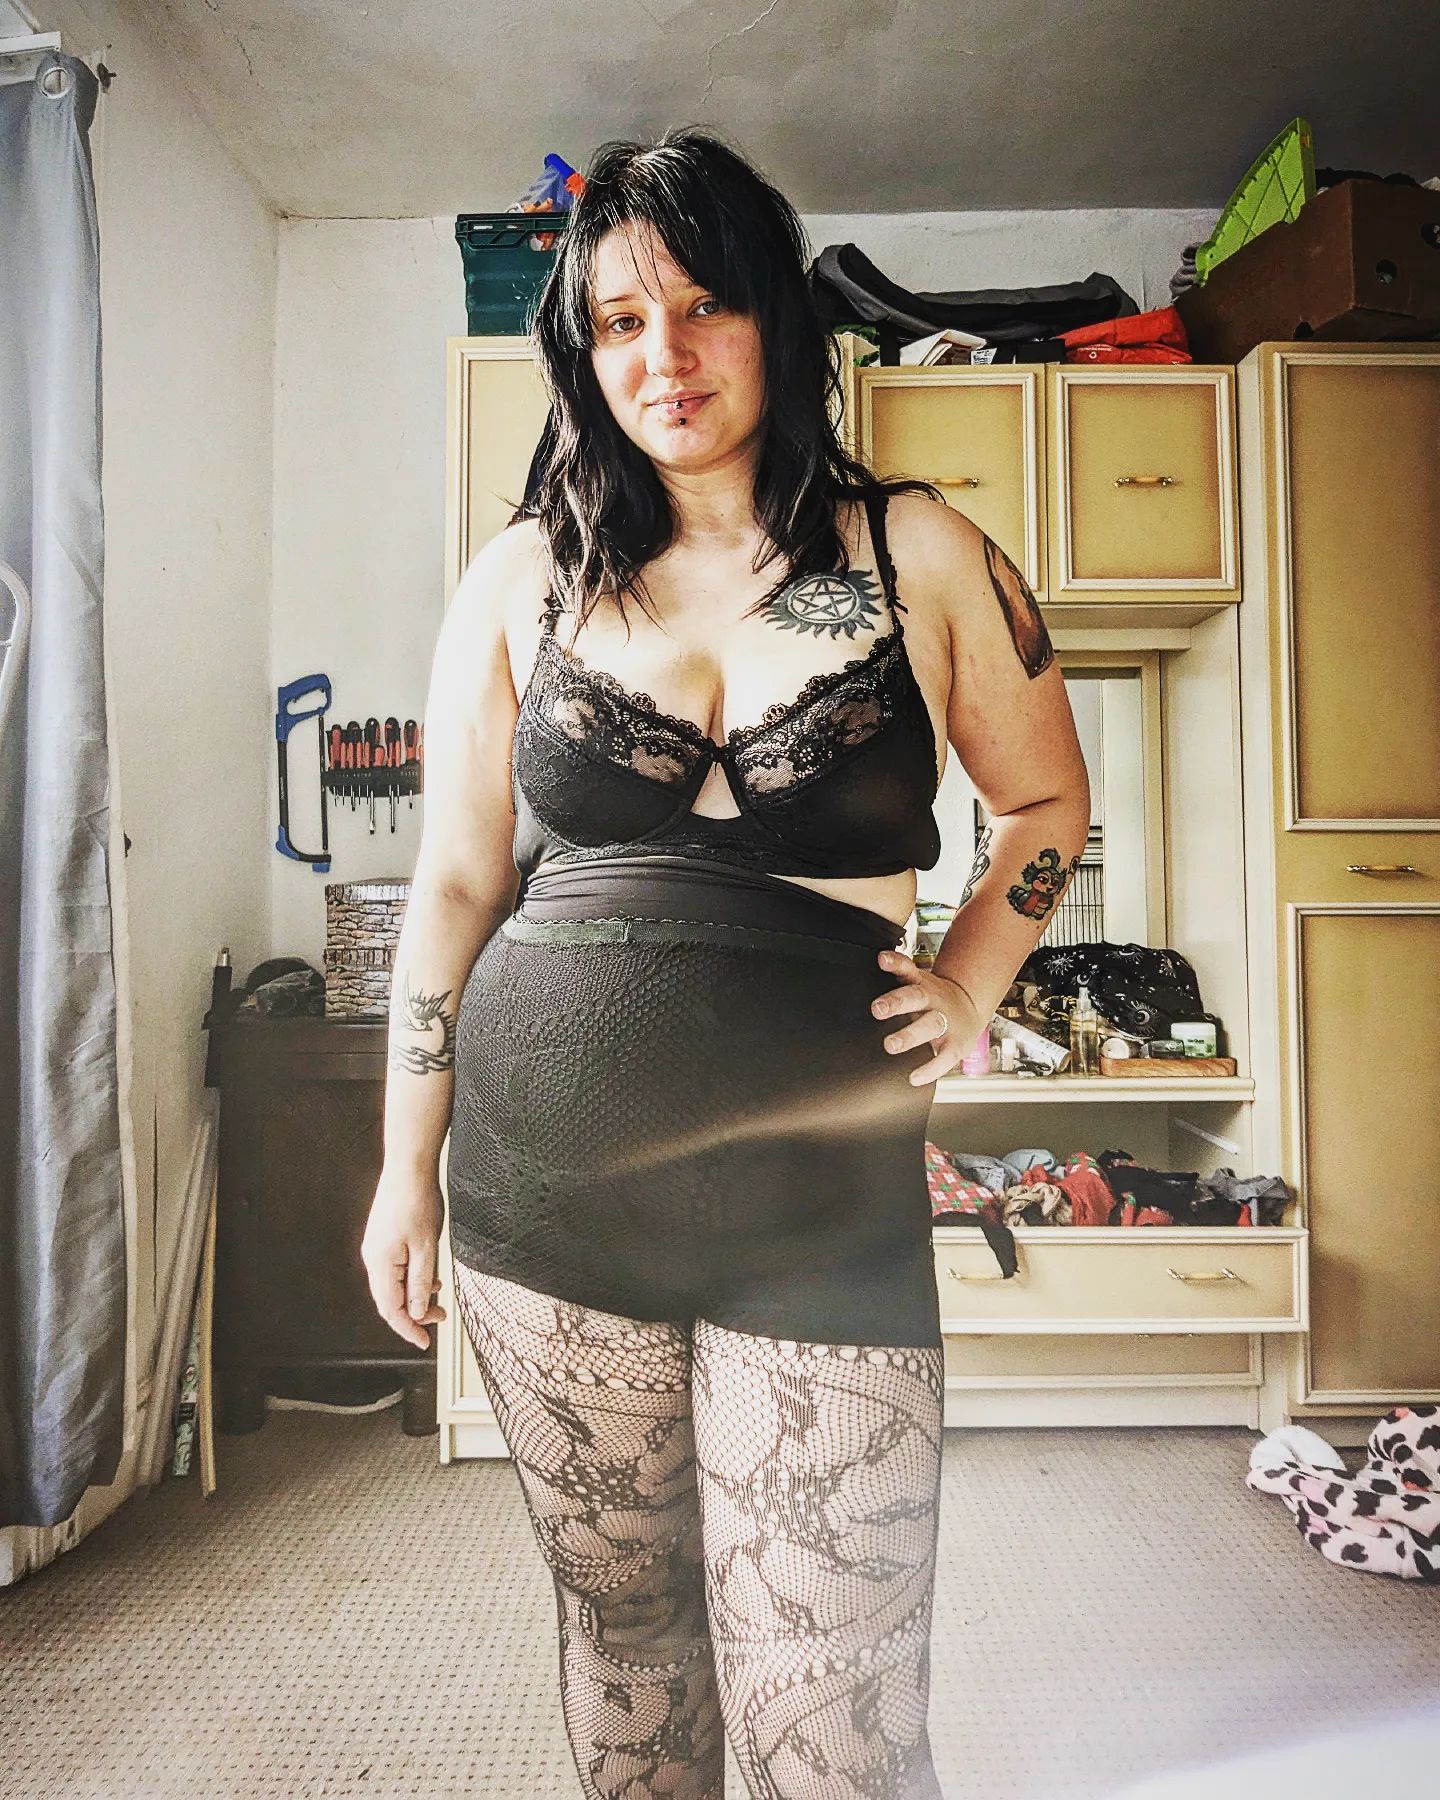 I love this look 😁

#realcurves #curvy #curvygirl #curvywoman #lingerie #sexy #onlyfansbbw #onlyfansengland #onlyfansgirl #onlyfans #subscribe #onlyfansaccount #bra #tattoos